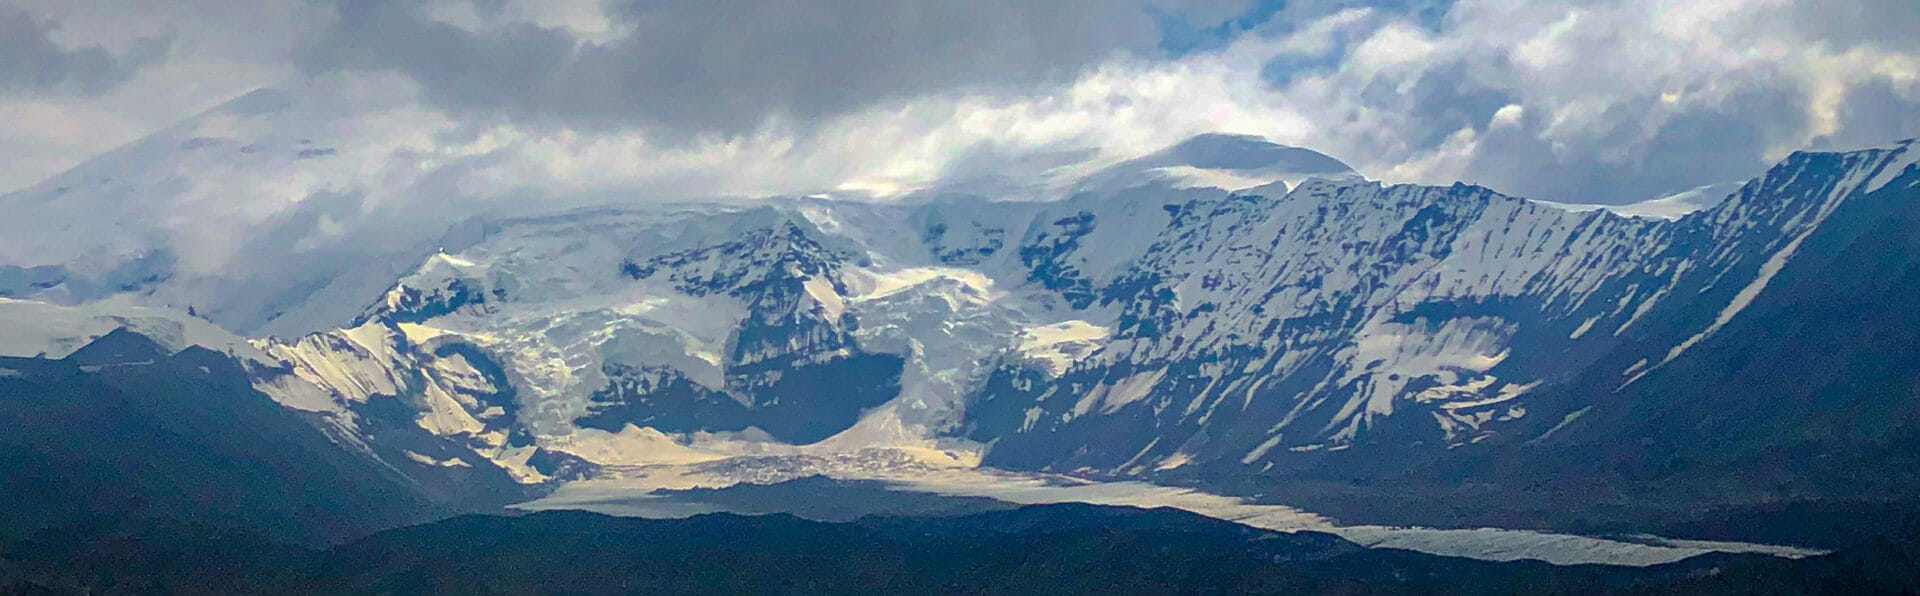 Glacier in Wrangell Mountains